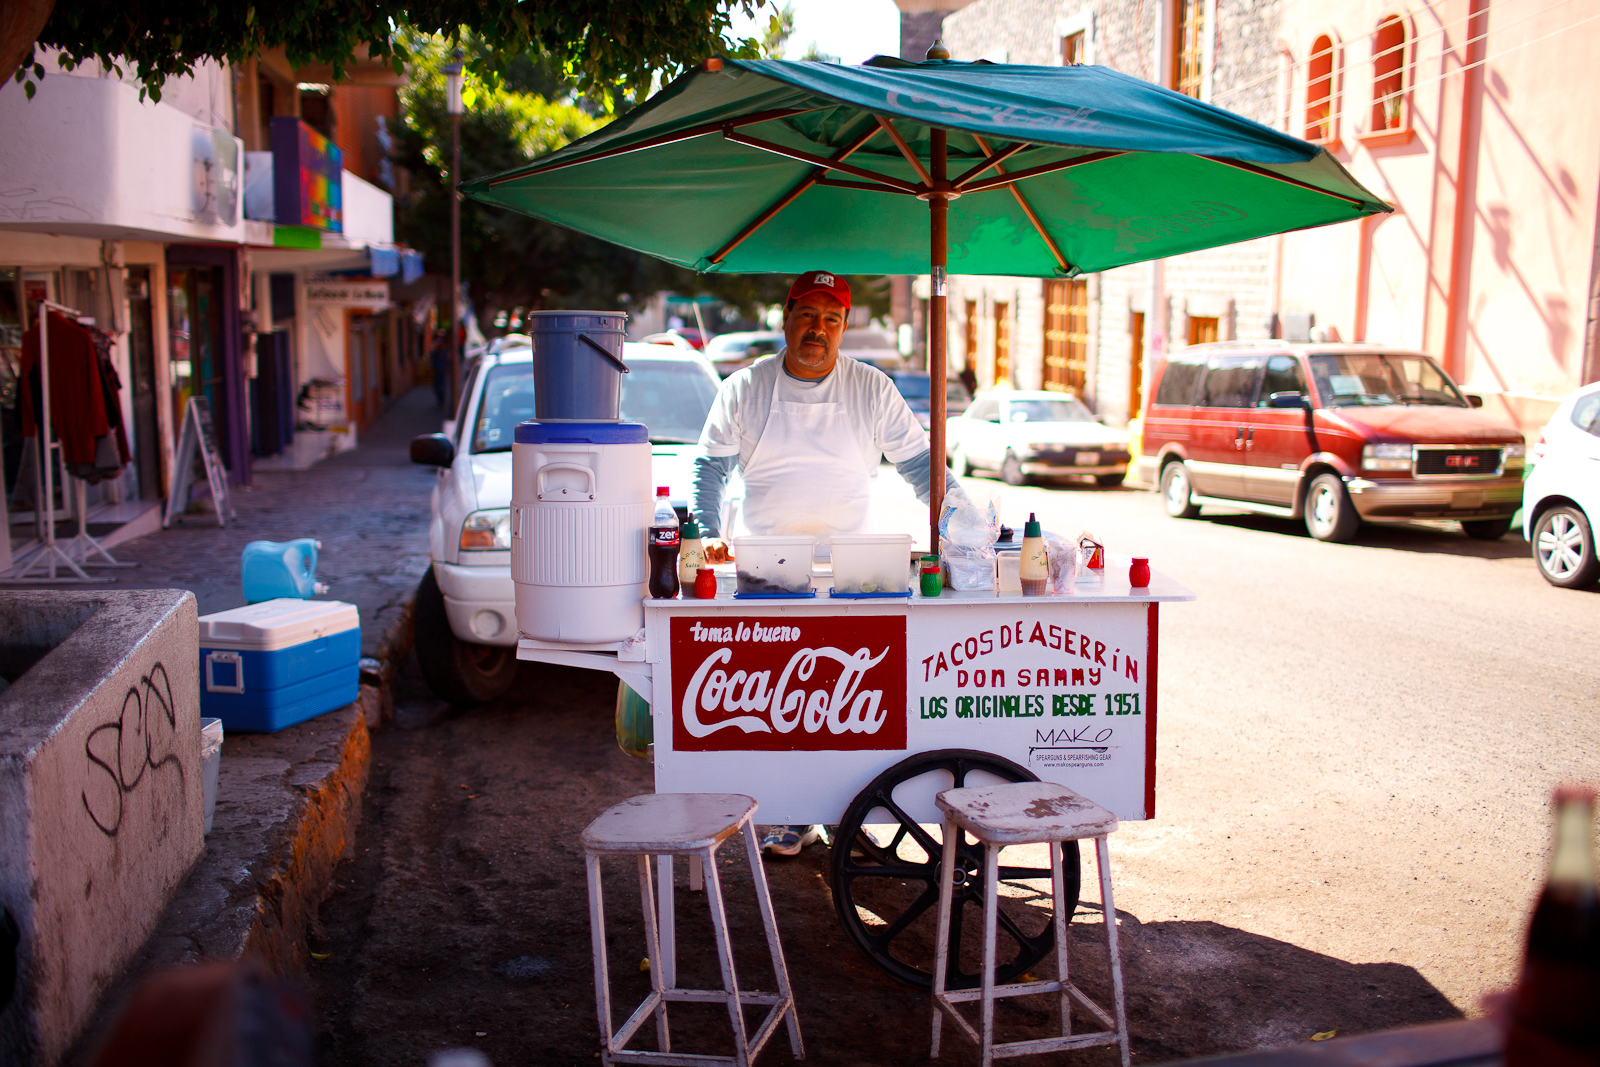 Tacos de Aserrín "Don Sammy," La Paz, Mexico — A Life Worth Eating